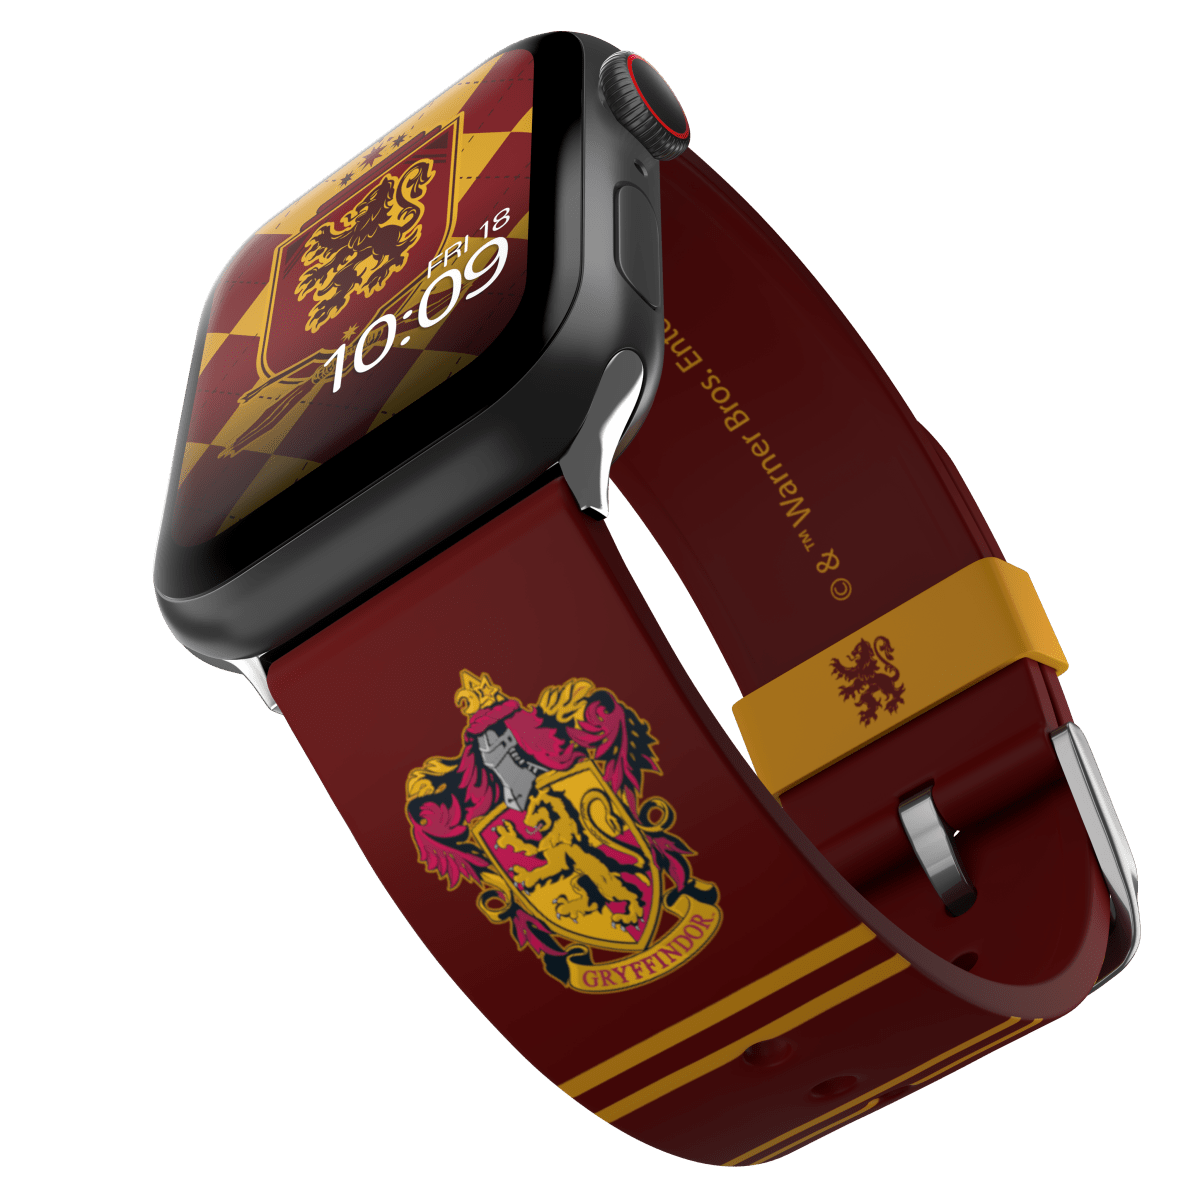 Harry Potter - Marauder's Map Smartwatch Band